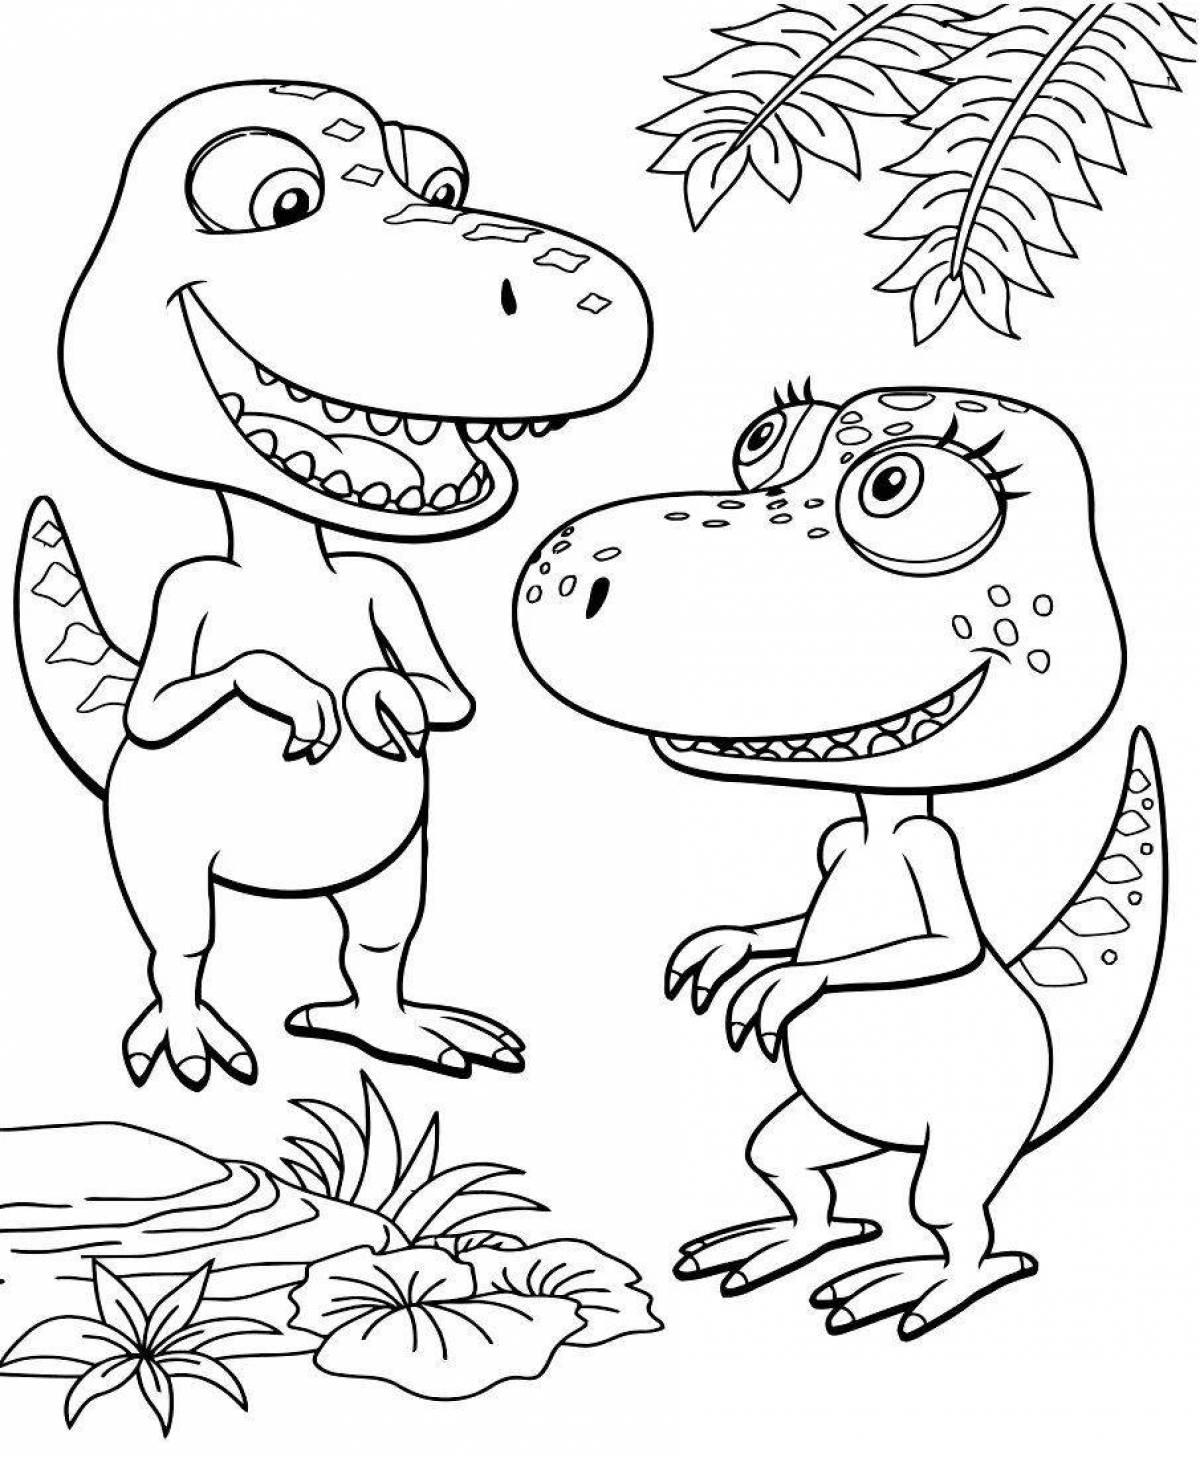 Adorable baby dinosaur coloring book